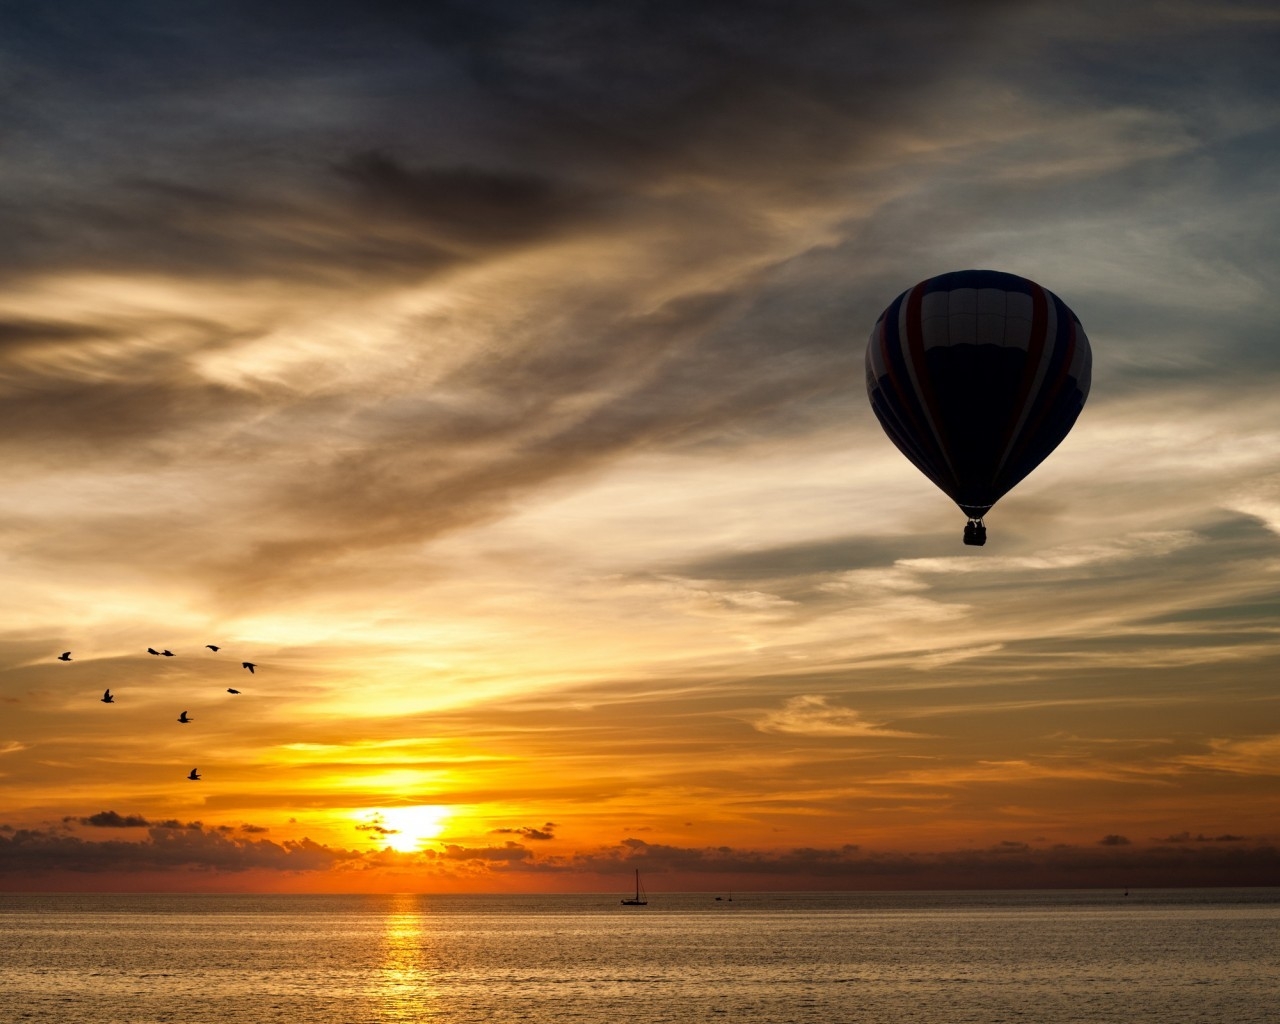 Balloon Towards Sunset for 1280 x 1024 resolution